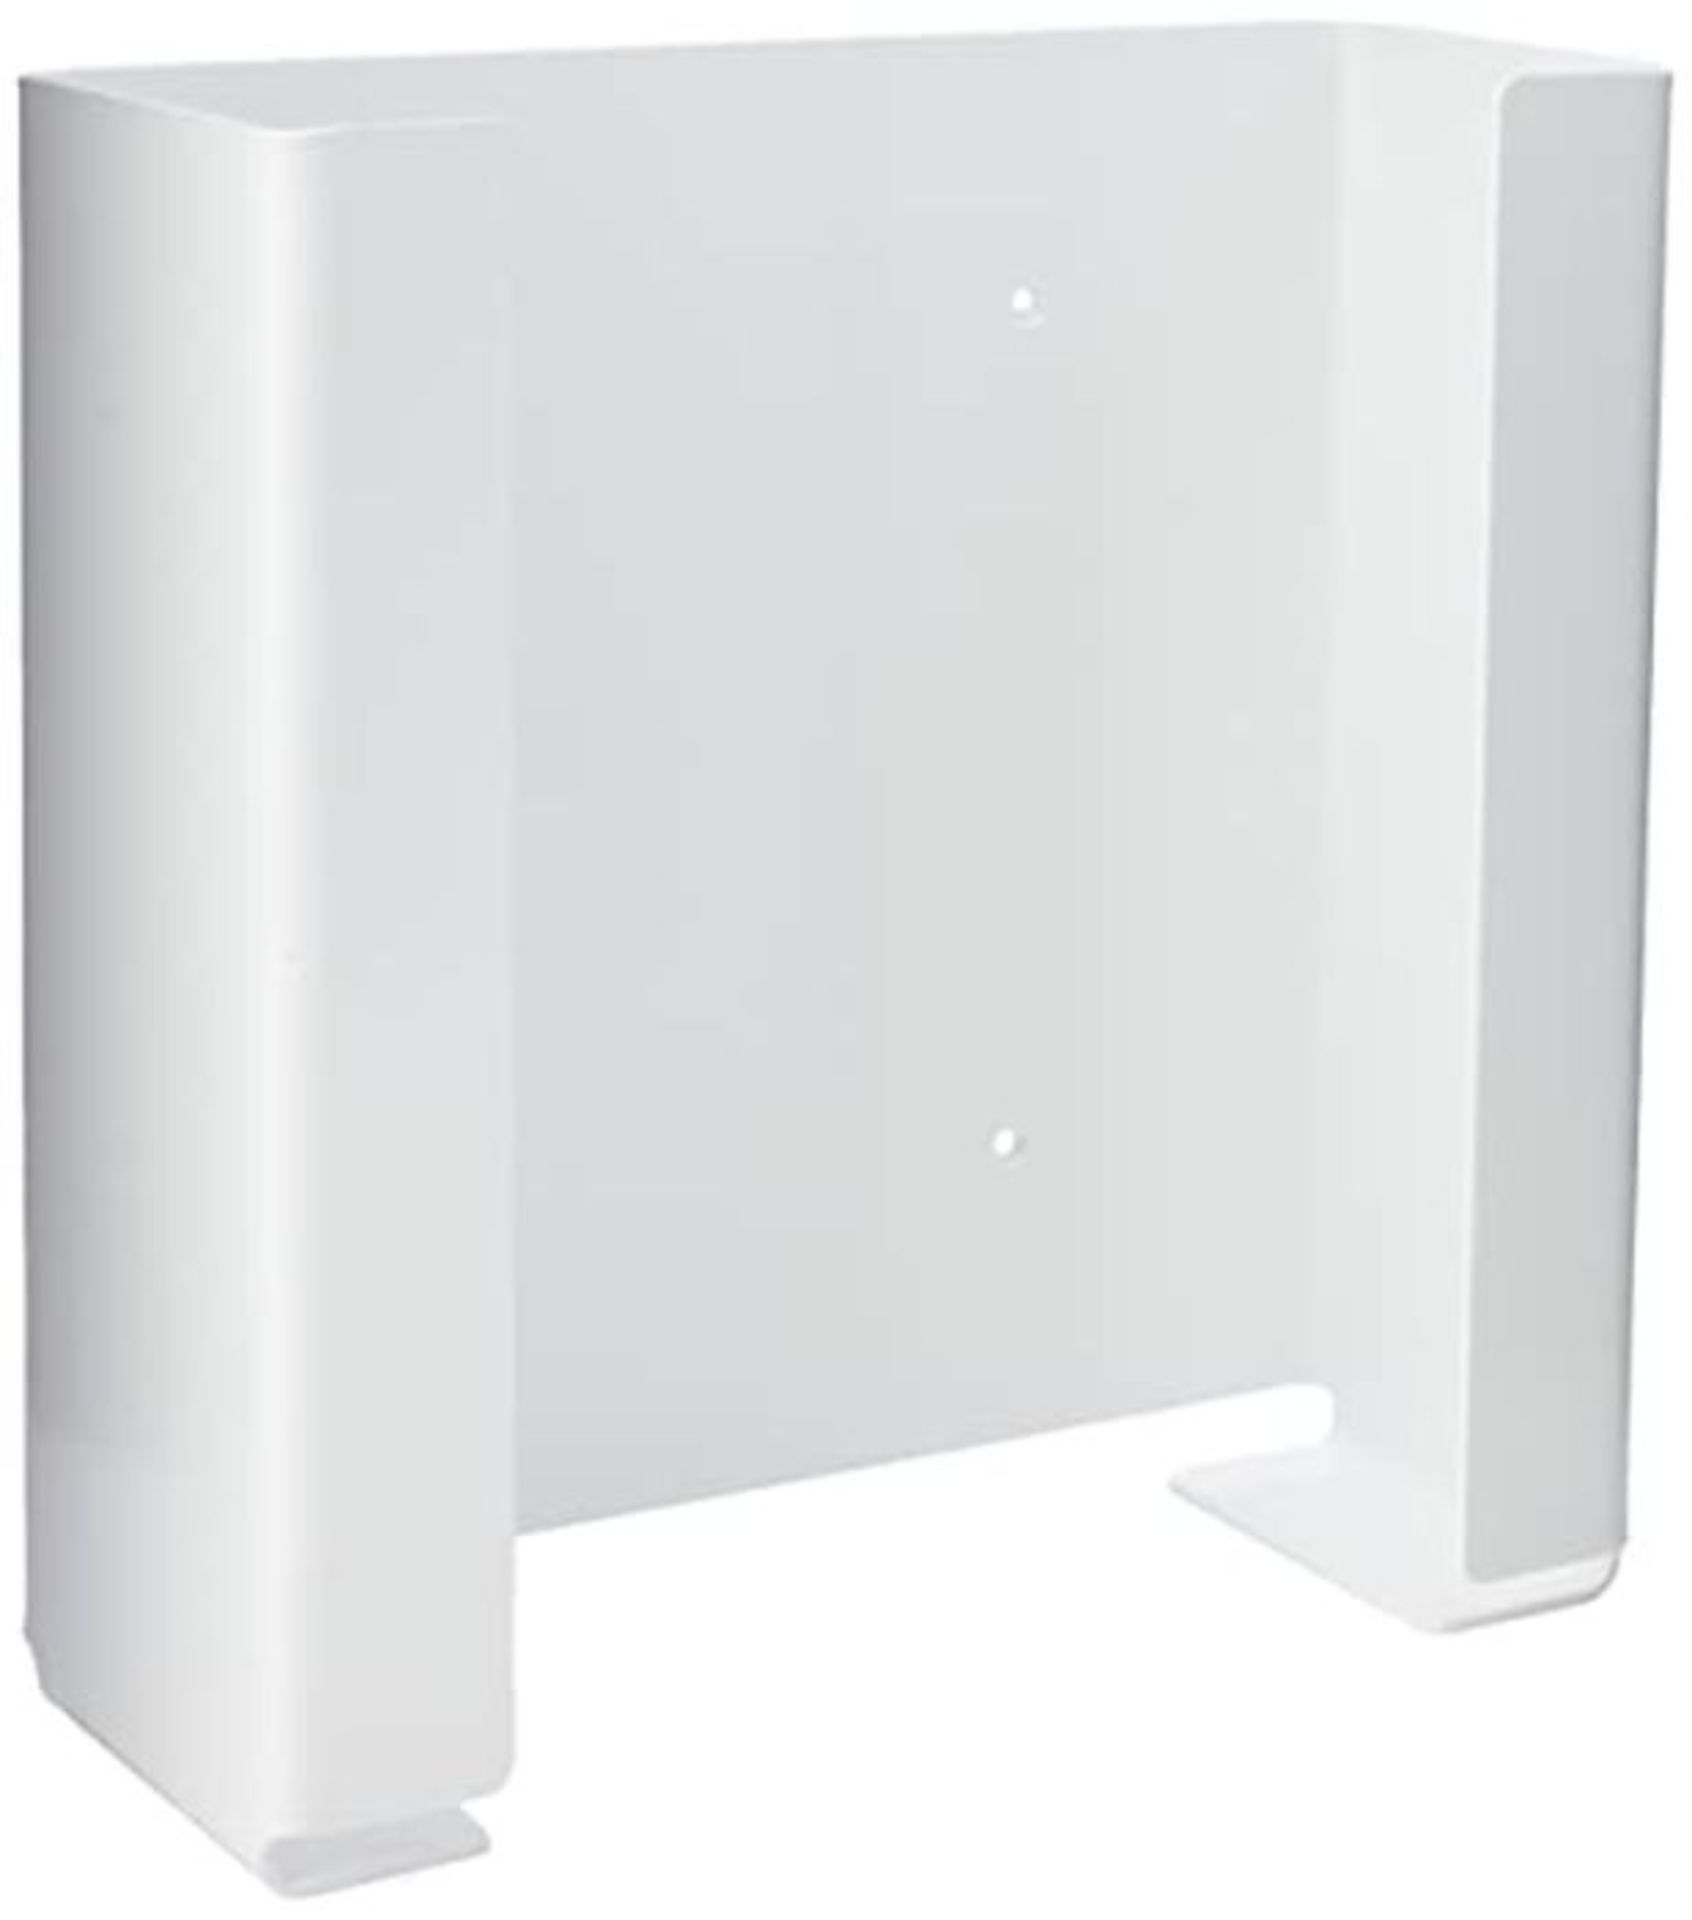 Angloplas GD2-BIO Double Glove Box Dispenser, 27 cm x 26.5 cm x 10 cm, White